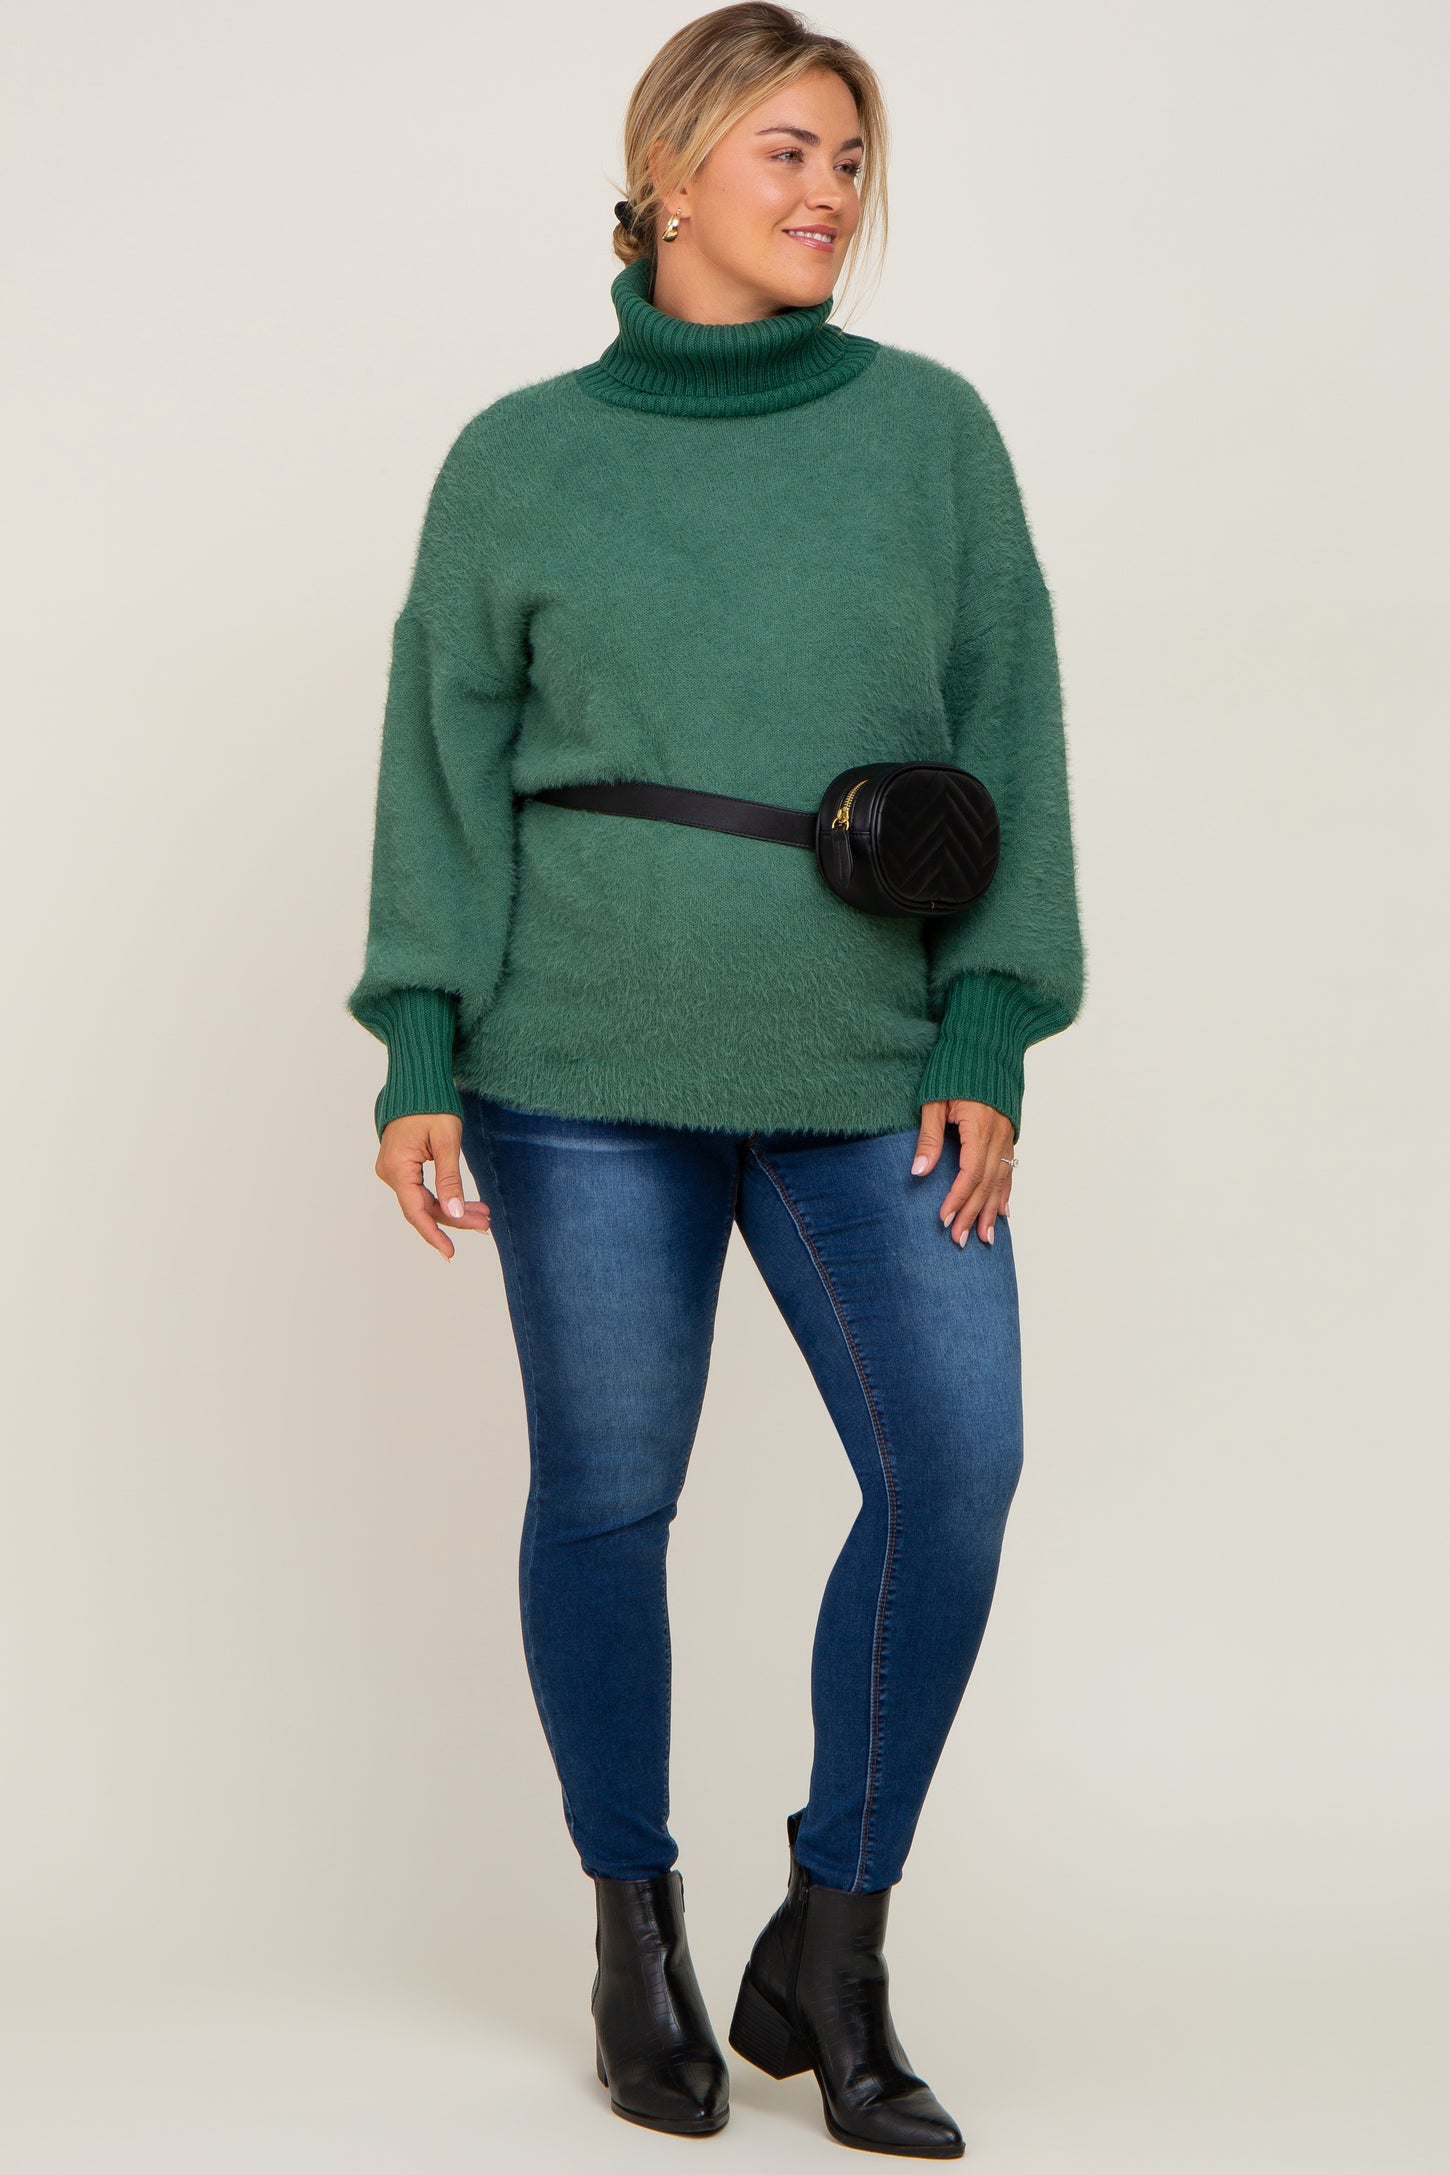 Forest Green Fuzzy Knit Turtleneck Maternity Plus Sweater